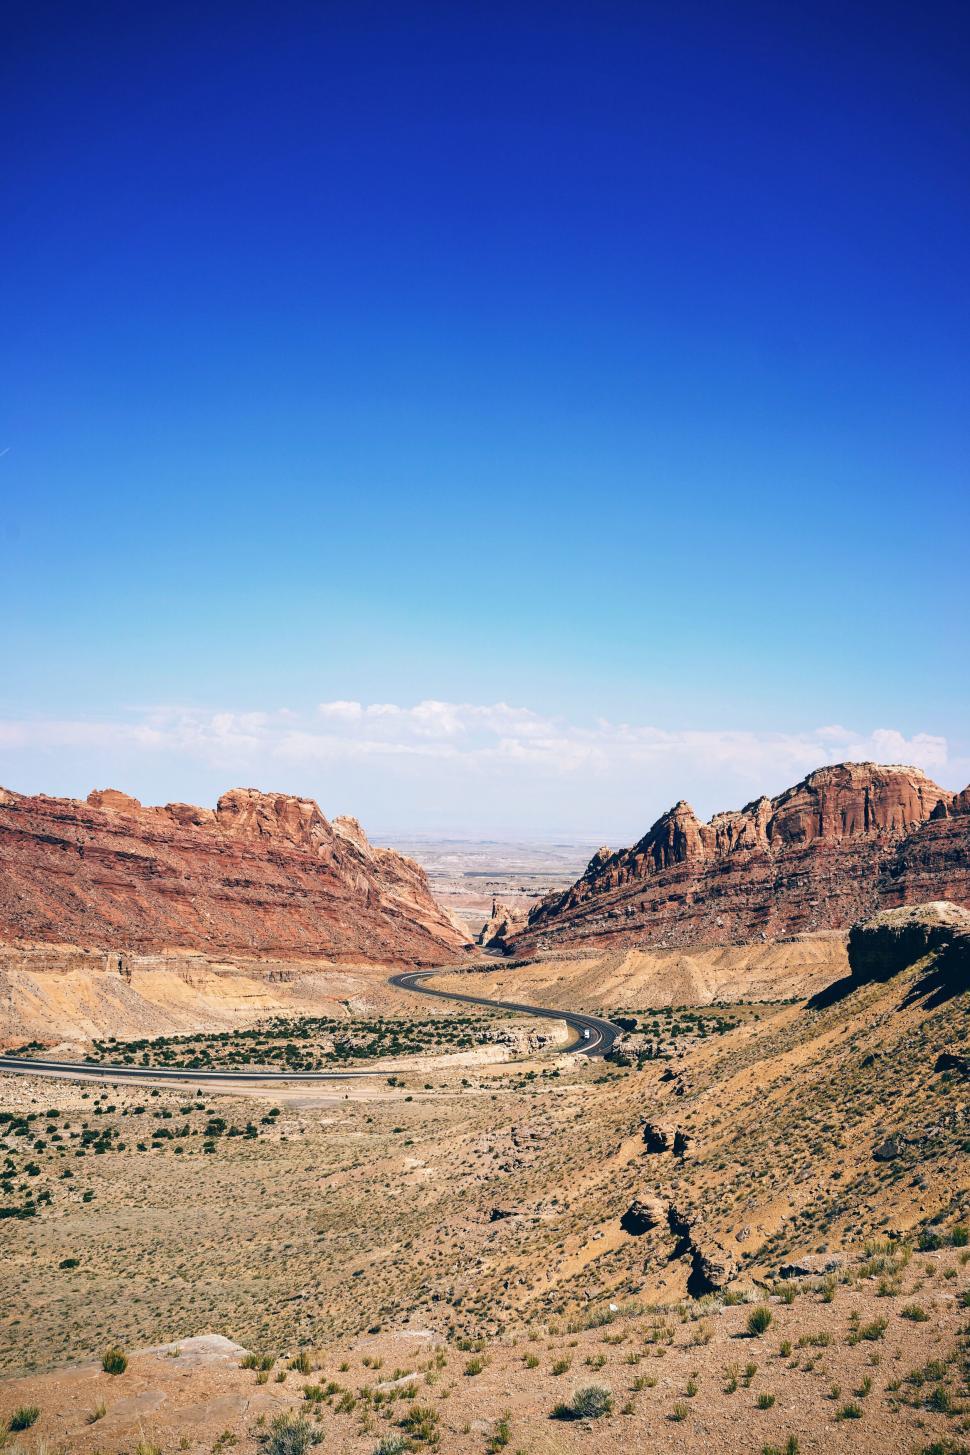 Free Image of Majestic canyon landscape under a blue sky 